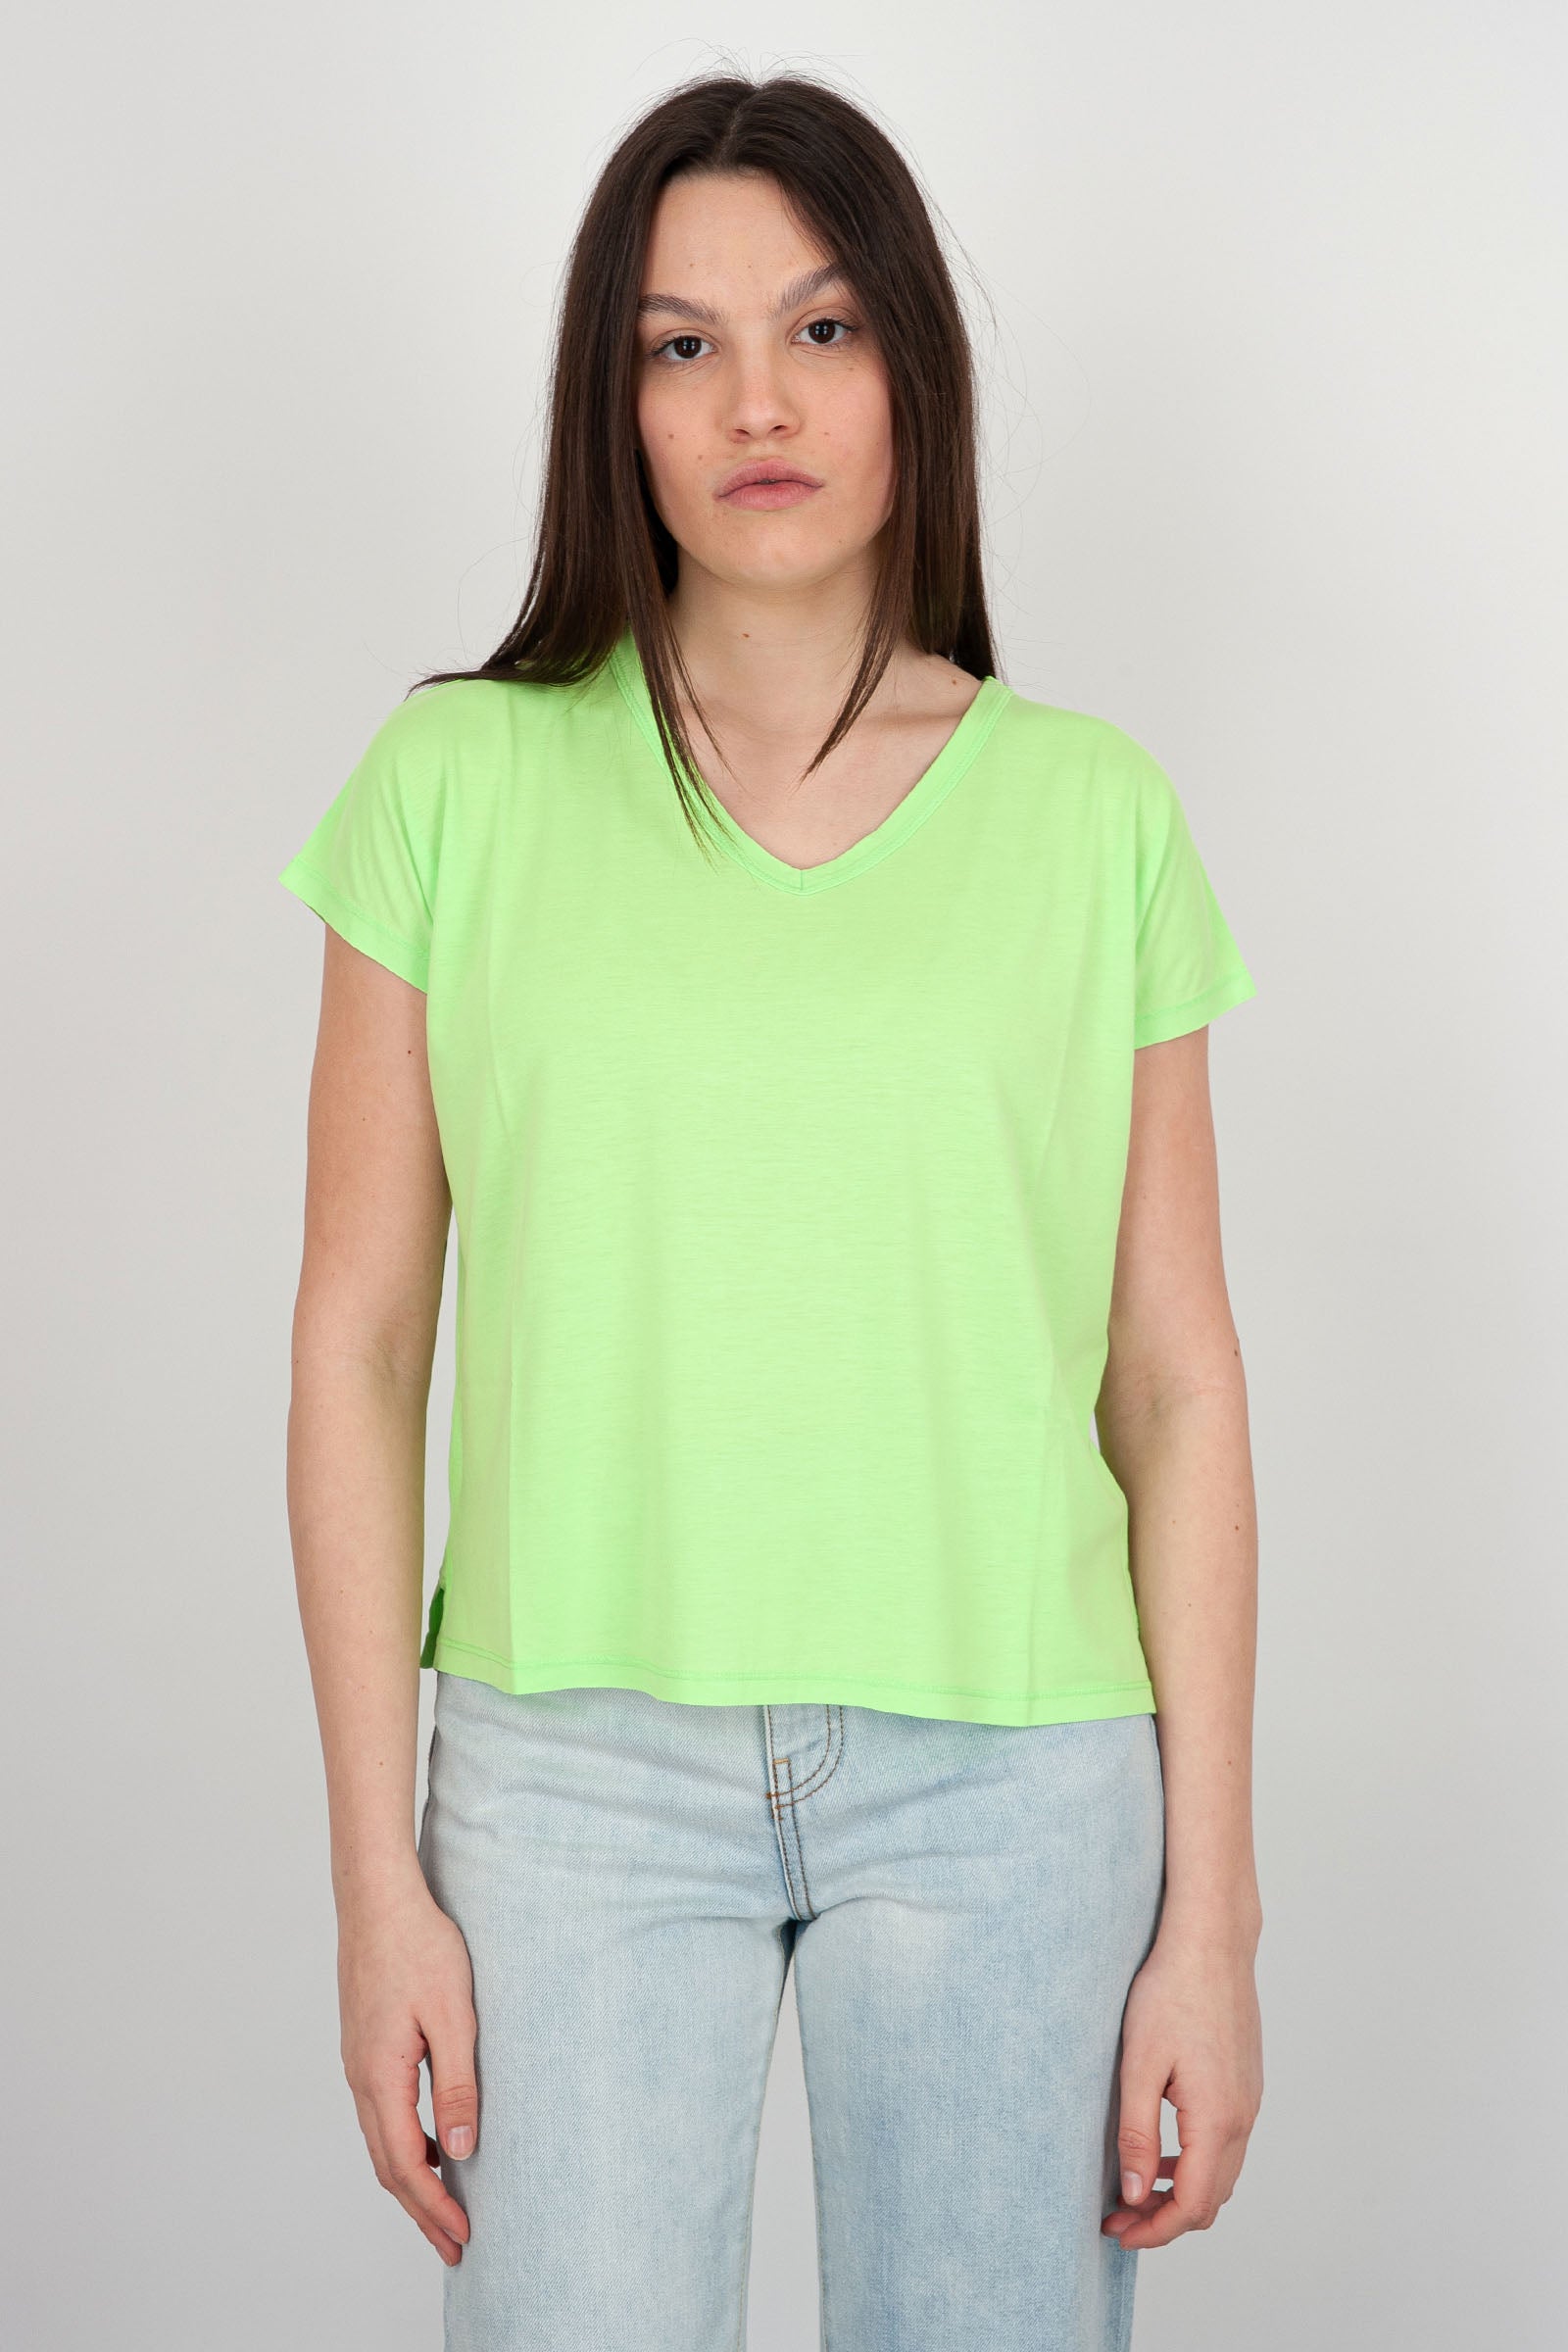 Absolut Cashmere Serra T-Shirt in Fluo Green Cotton - 3